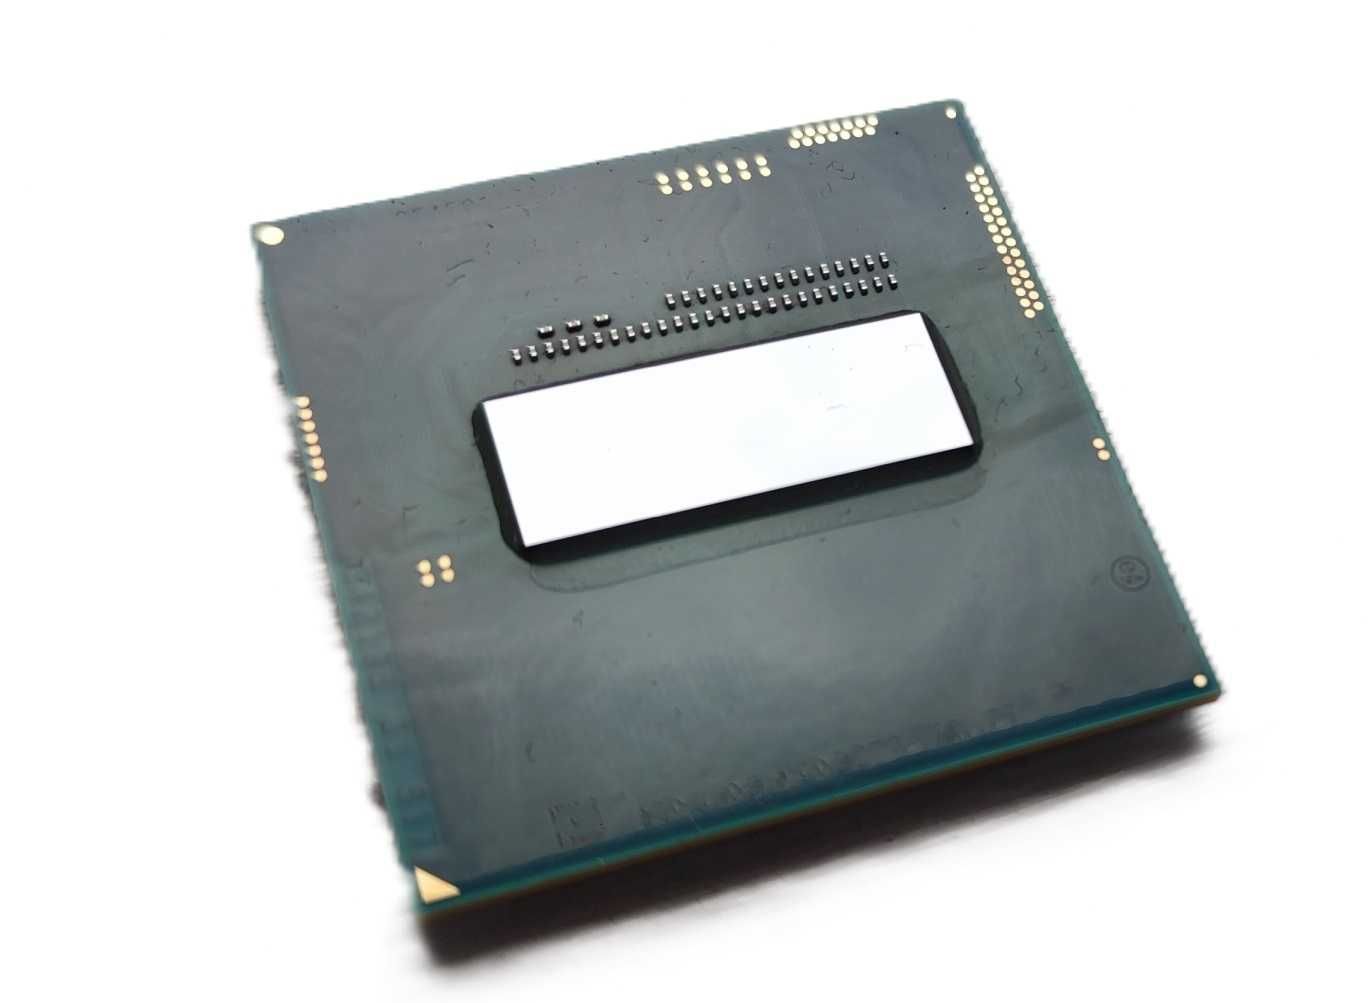 Procesor i7-4702mq do laptopa